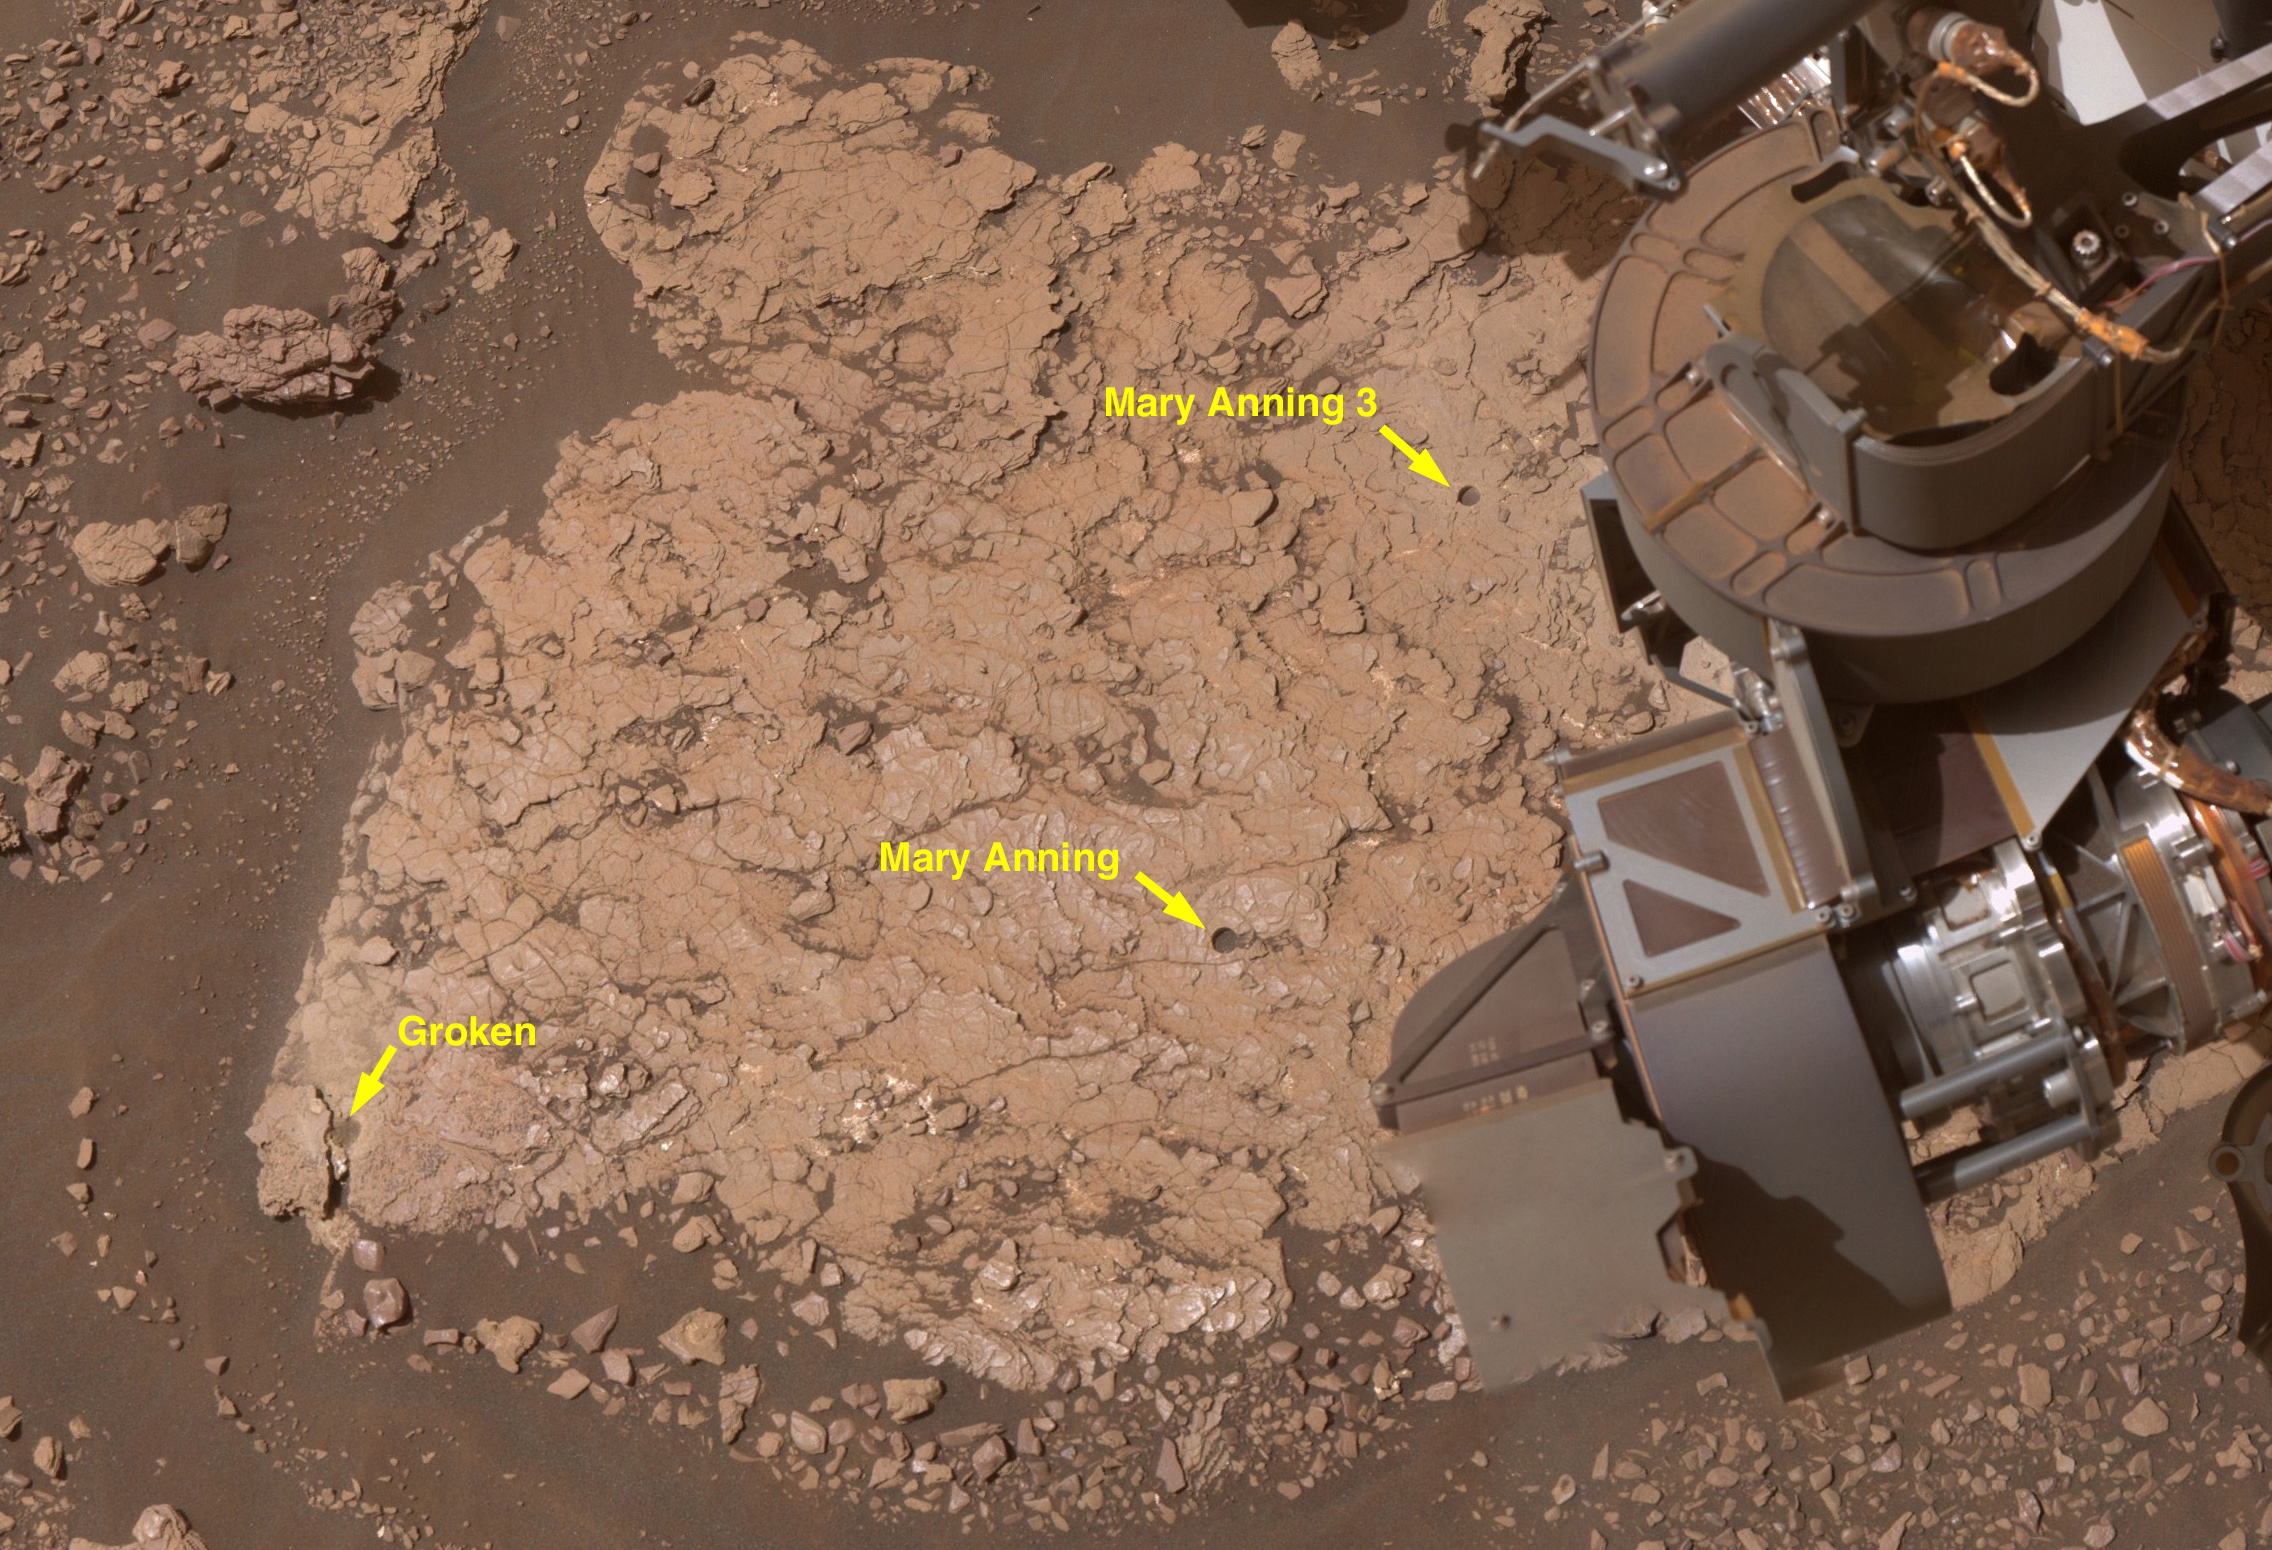 curiosity rover data desk